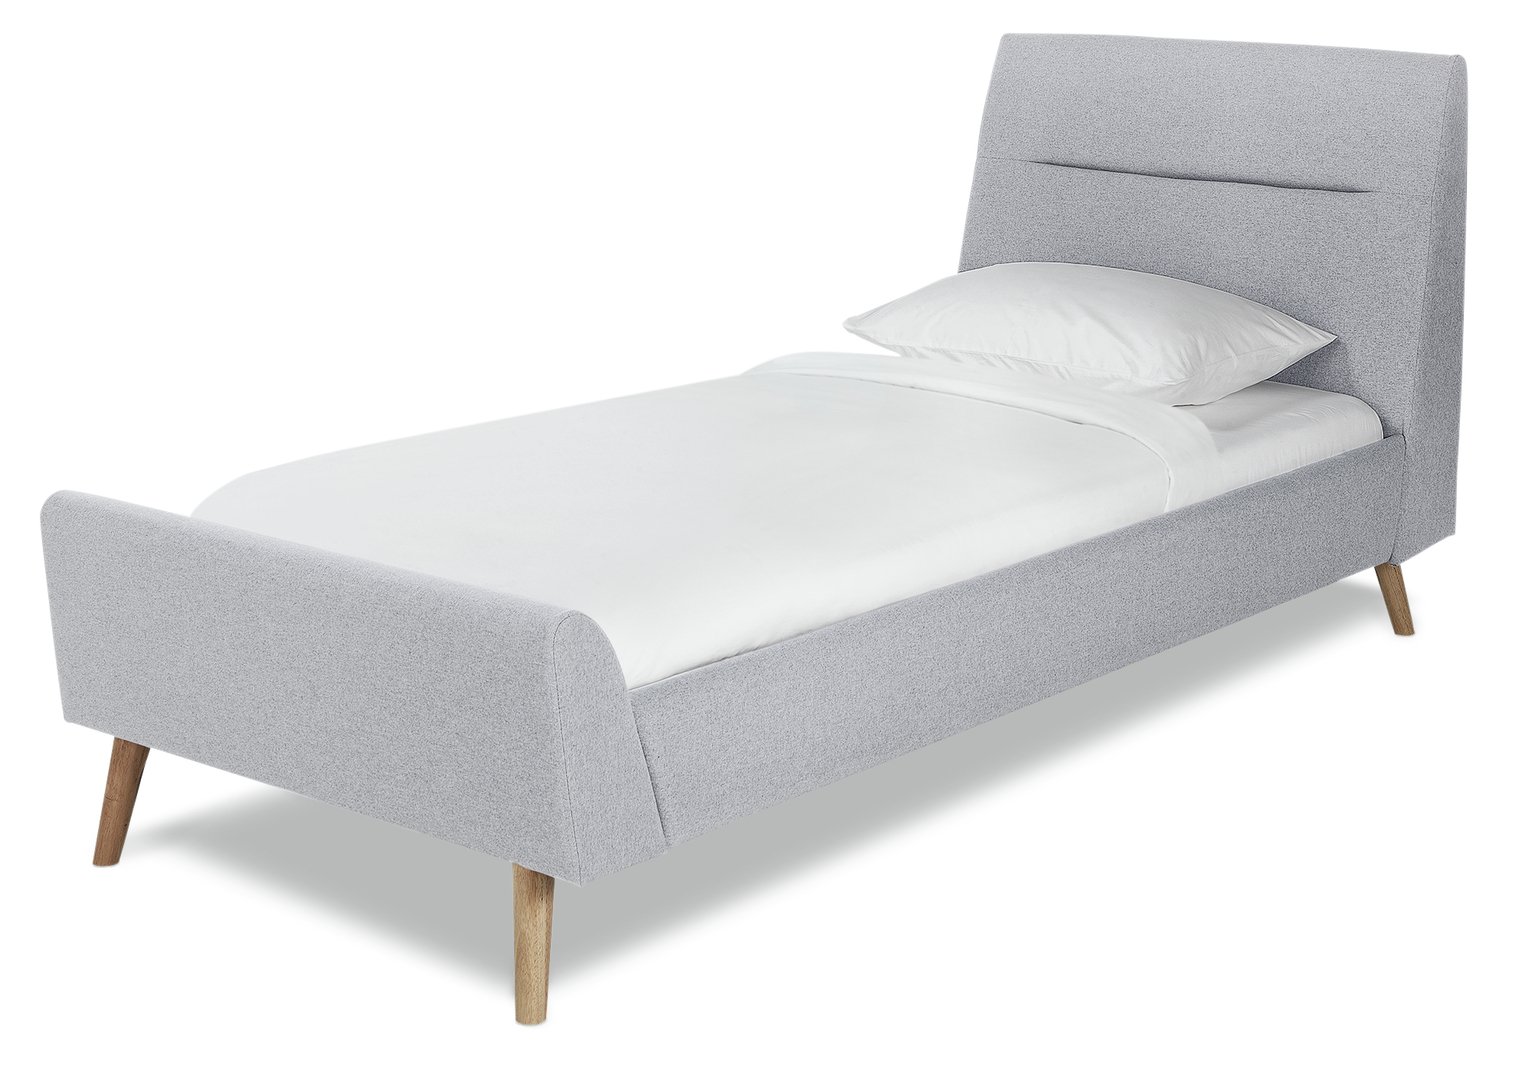 Argos Home Finn Grey Single Bed Frame review